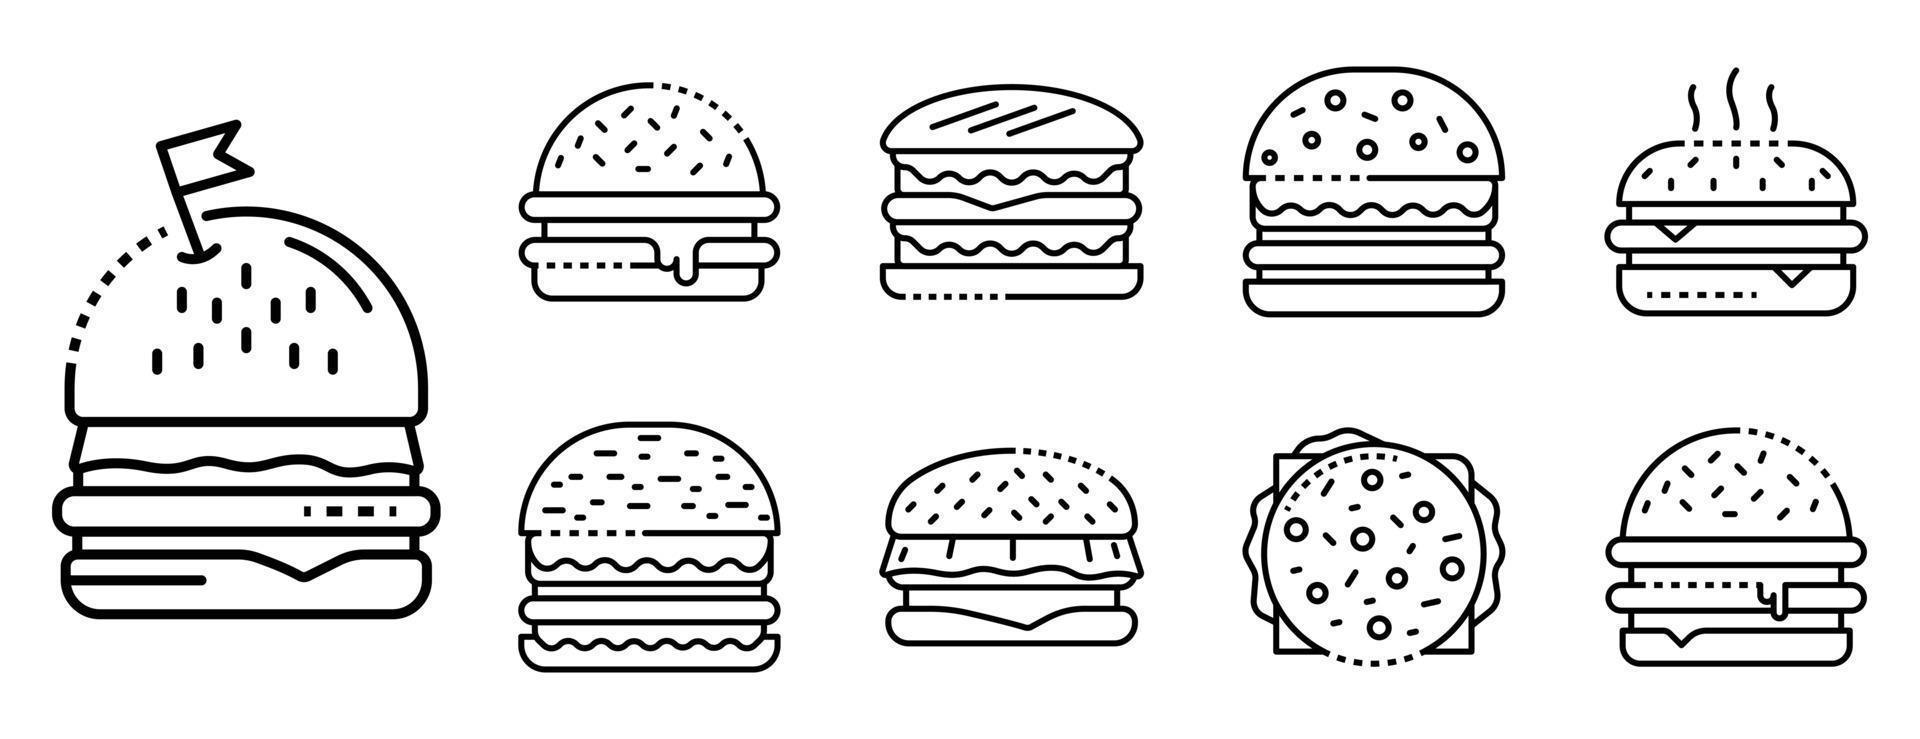 Burger-Icons gesetzt, Umrissstil vektor